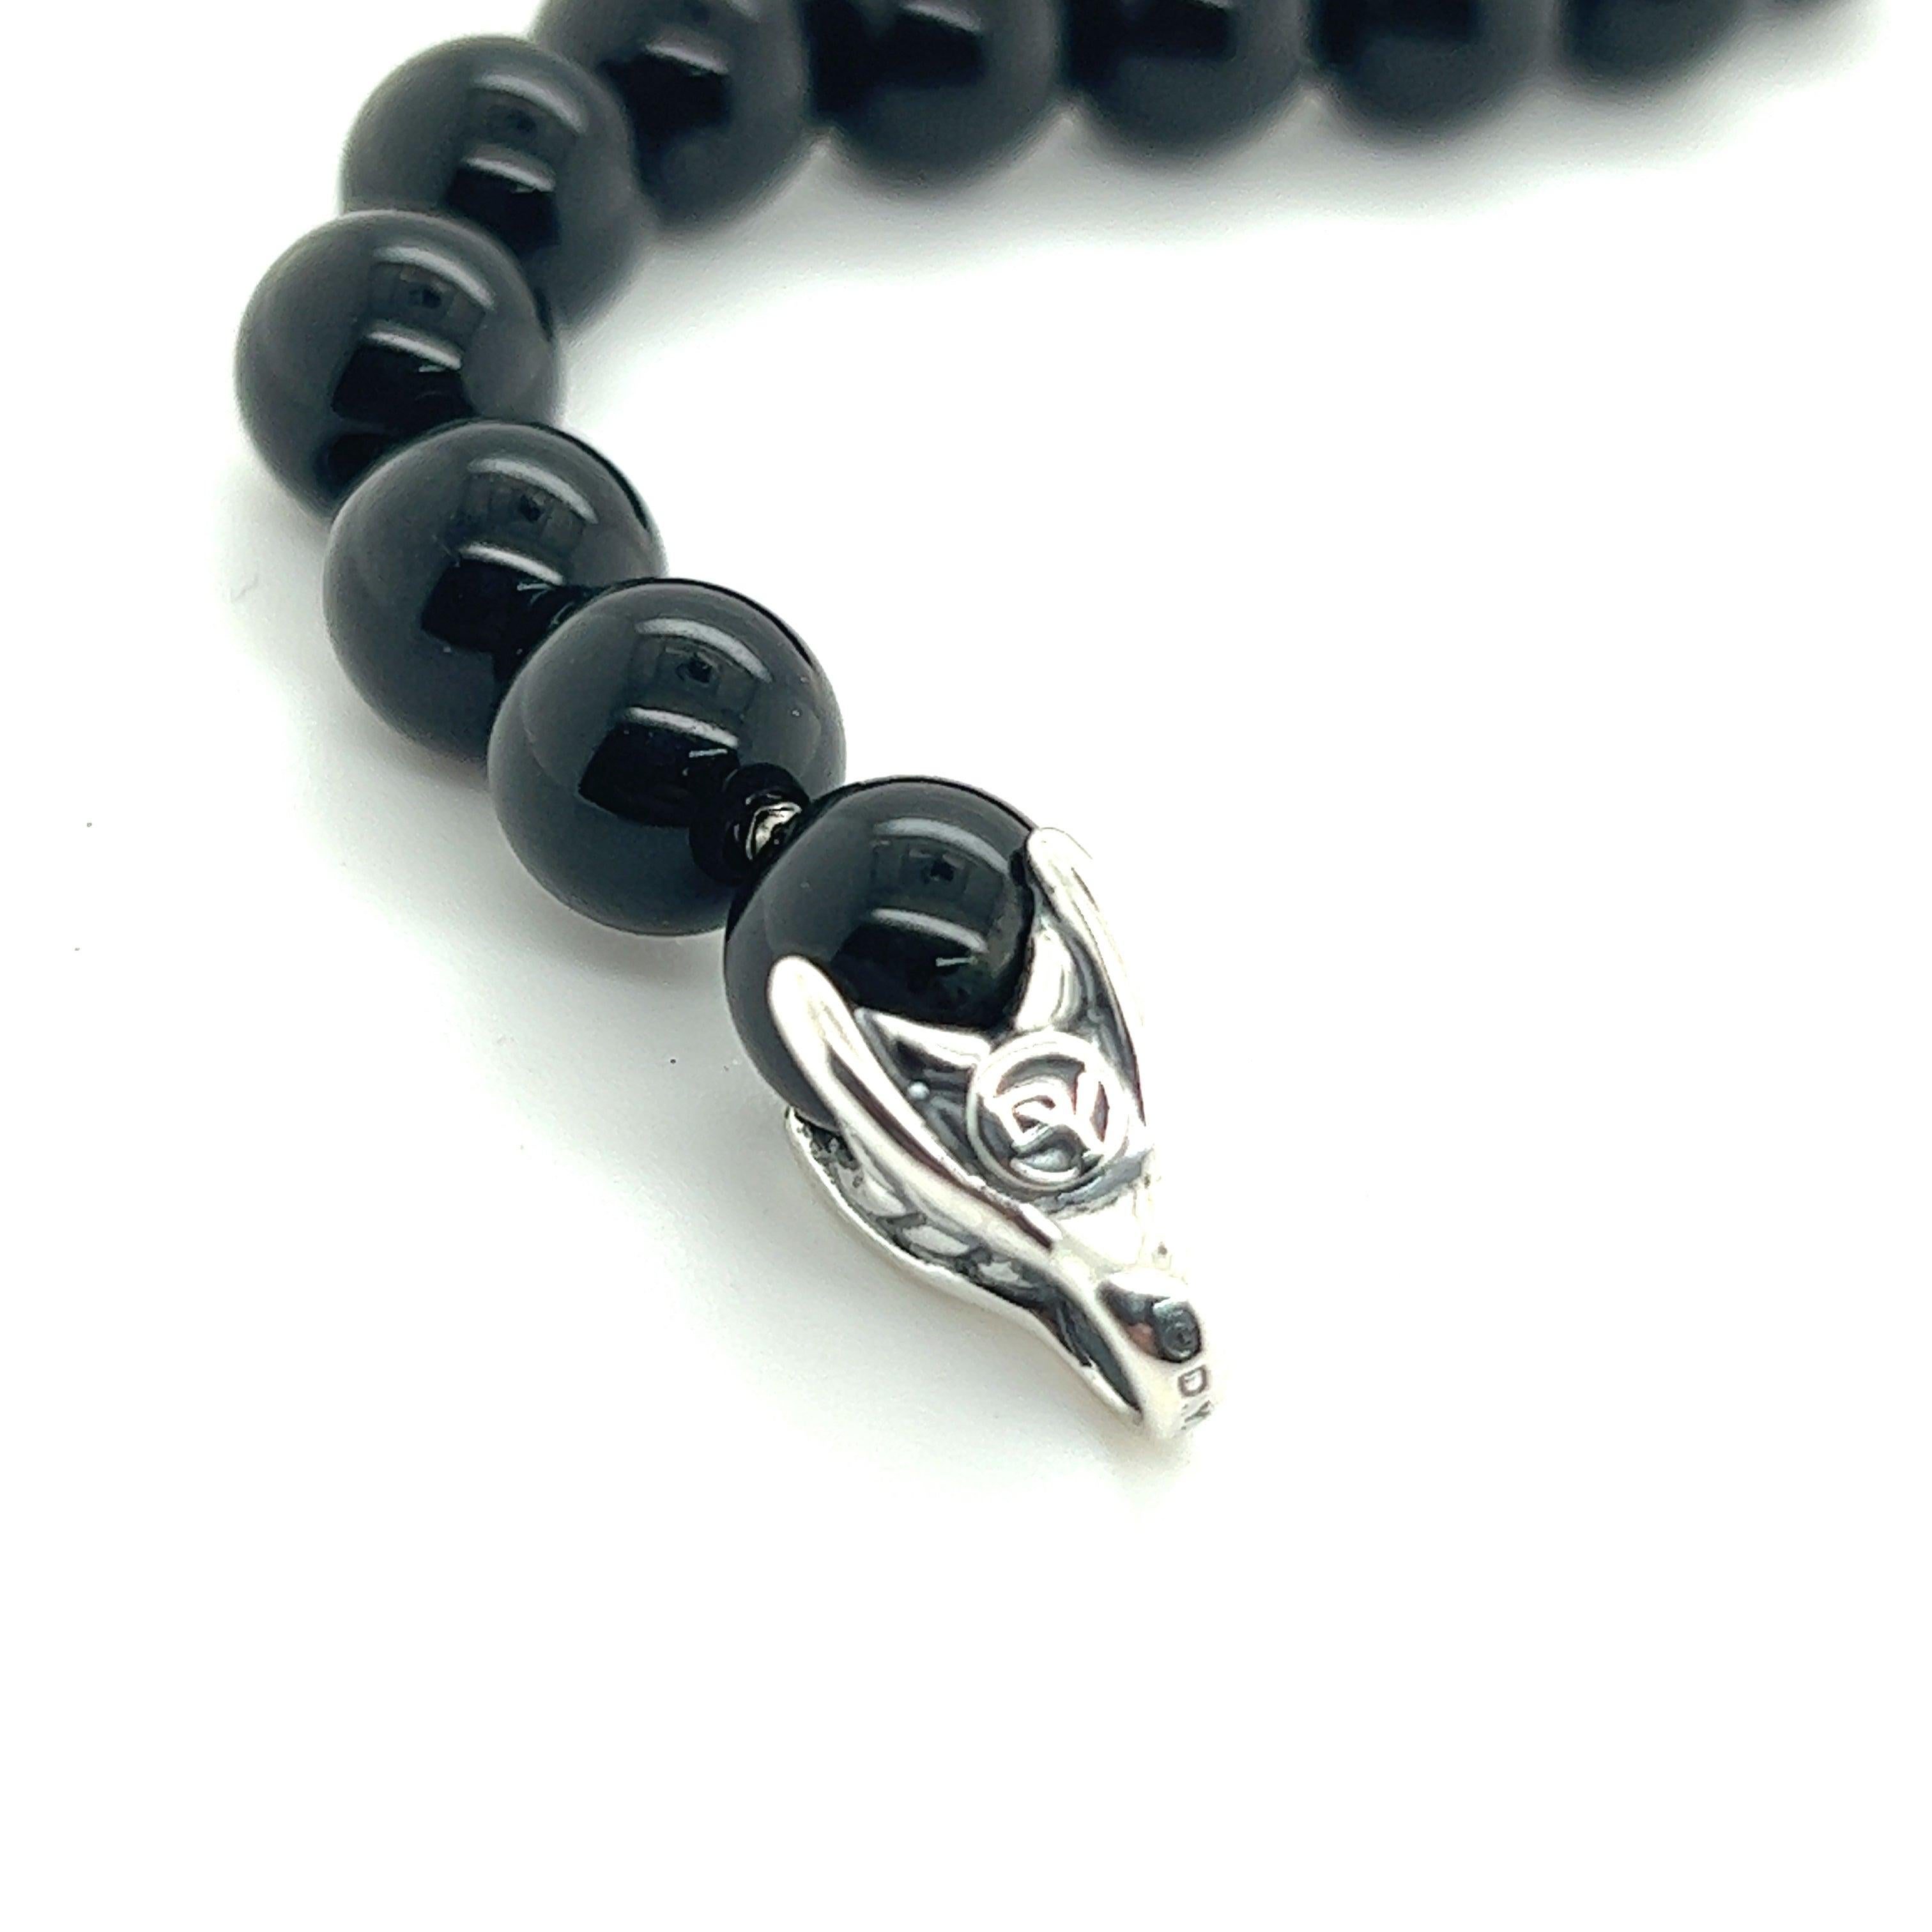 David Yurman Authentic Estate Onyx Spiritual Beads Bracelet 8.5